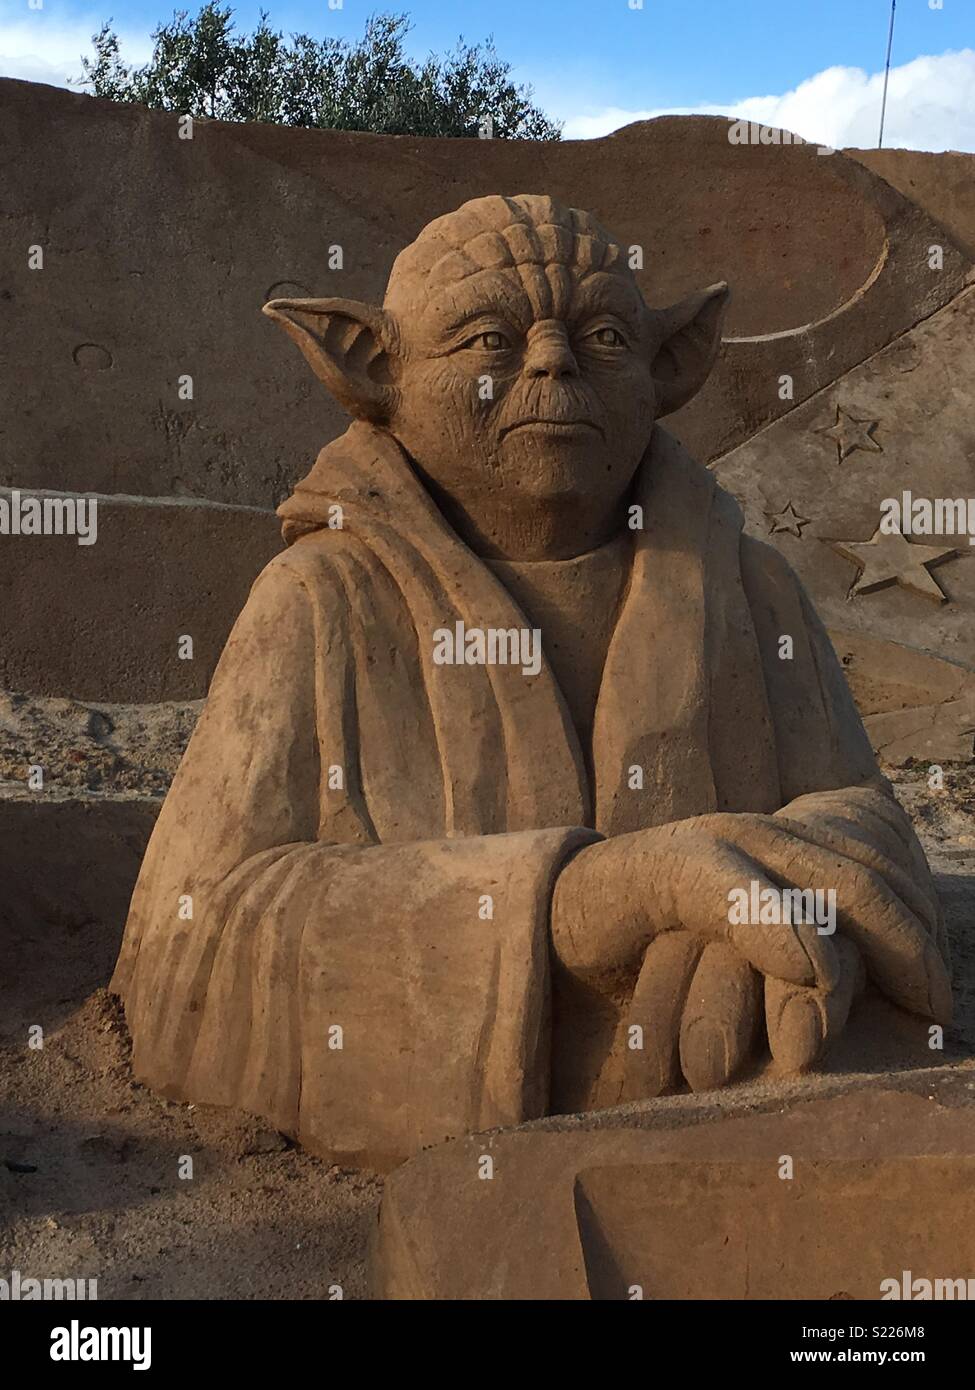 Yoda Star Wars sand sculpture taken at FIESA Sand Sculpture Festival in Pera, Portugal Stock Photo